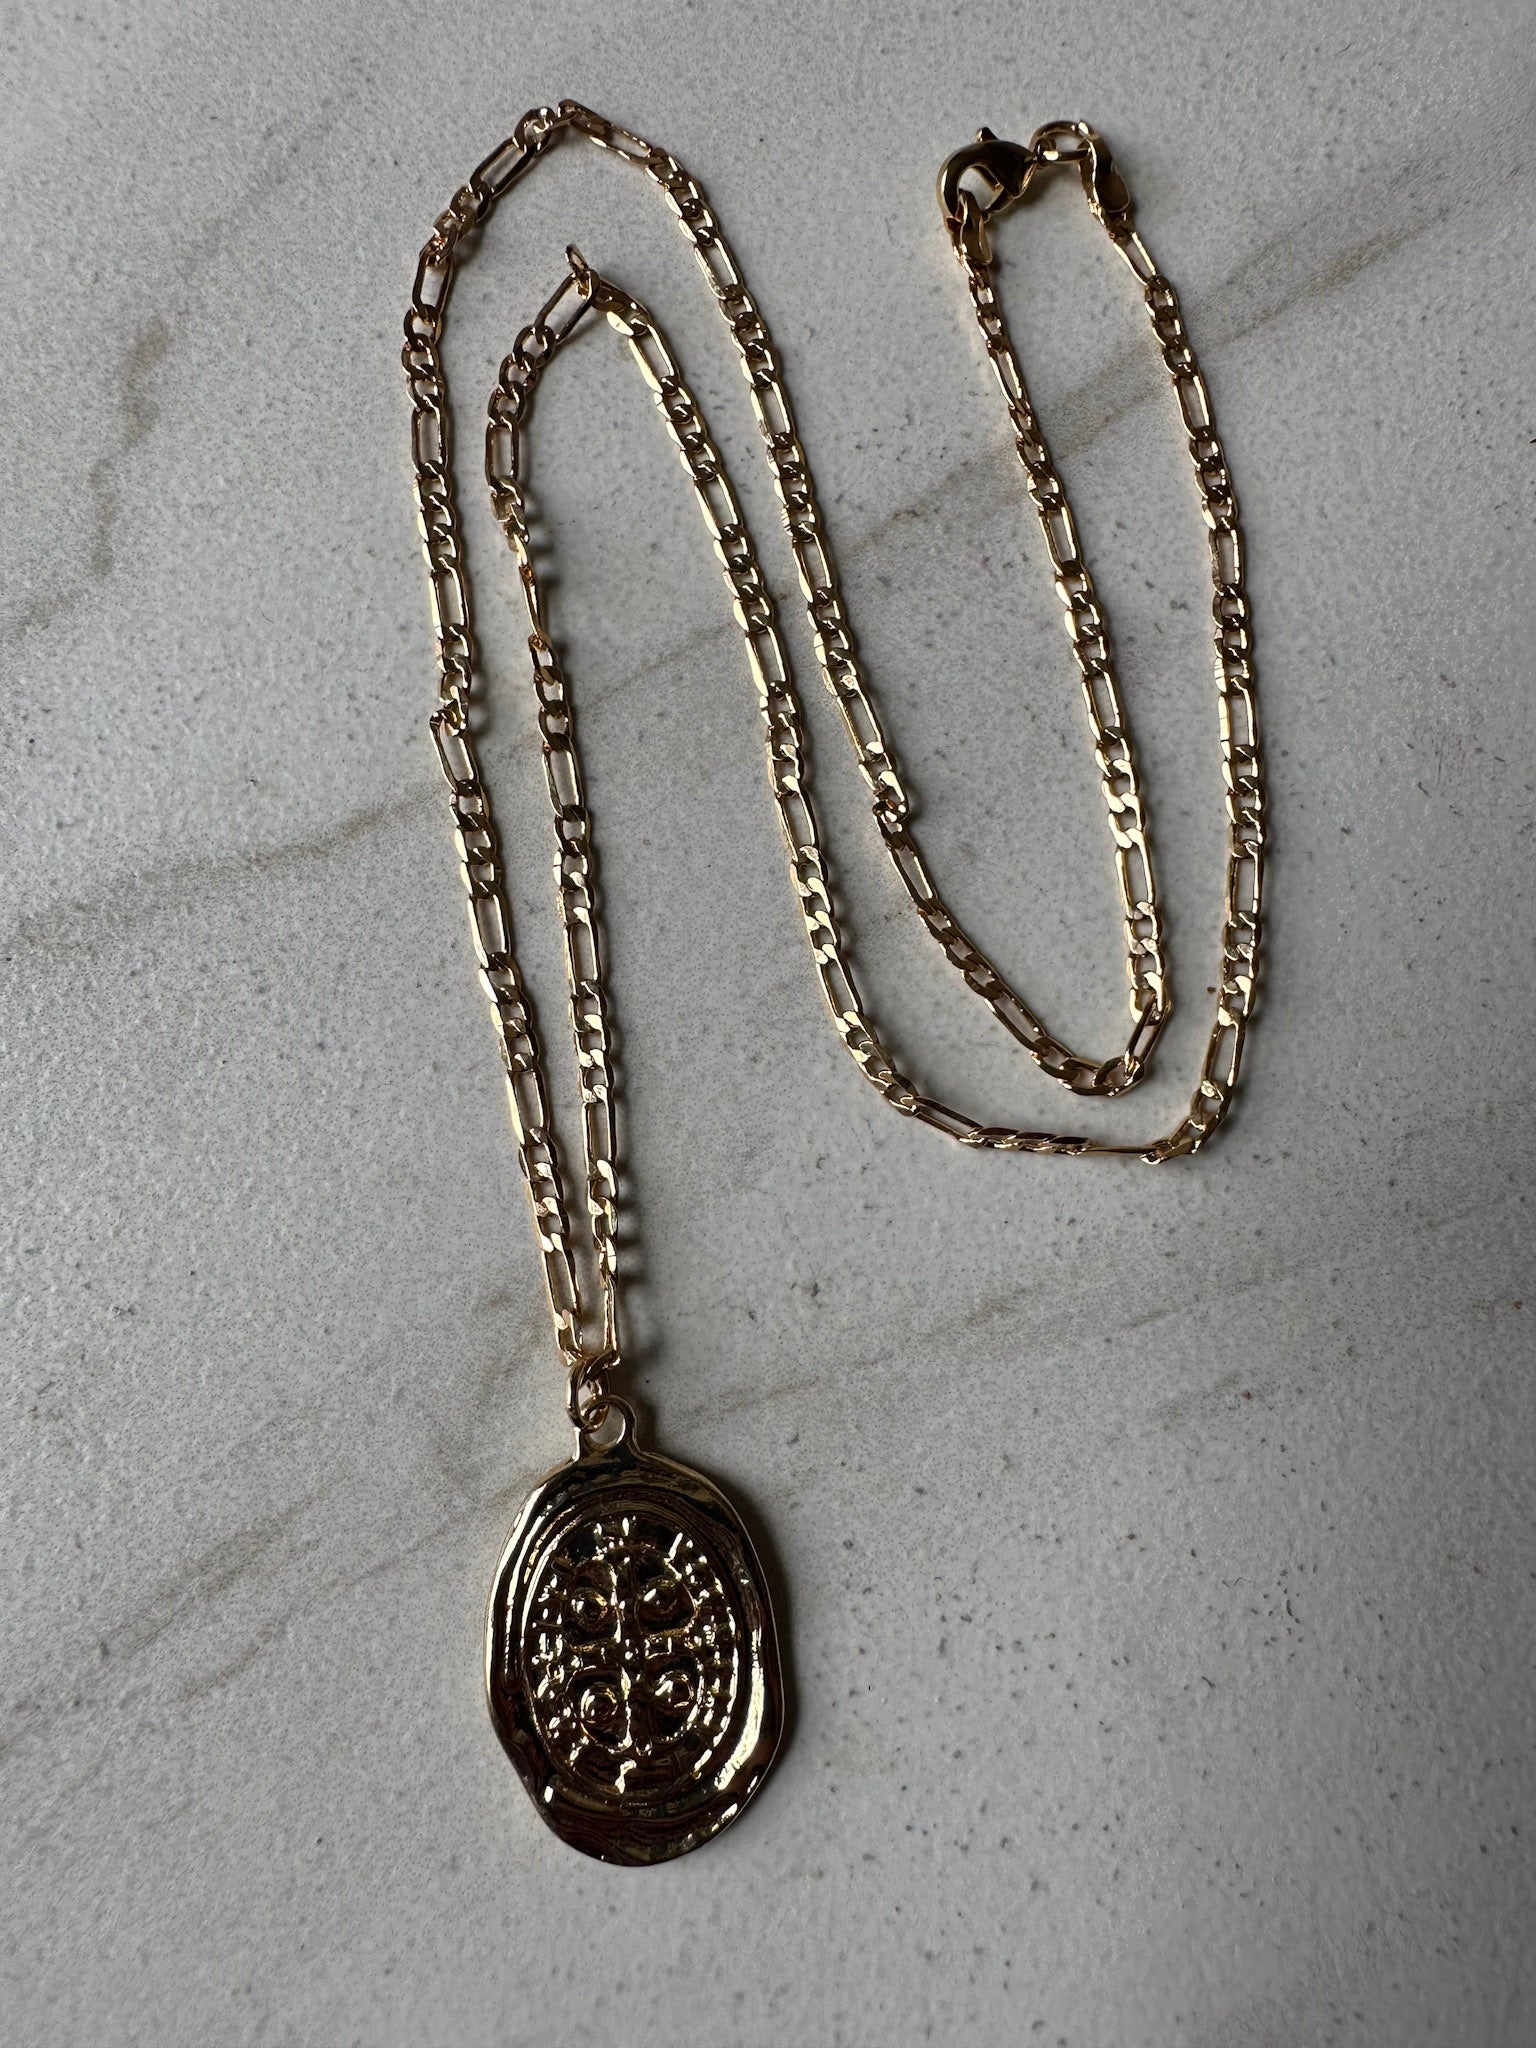 Rustic Faith Necklace